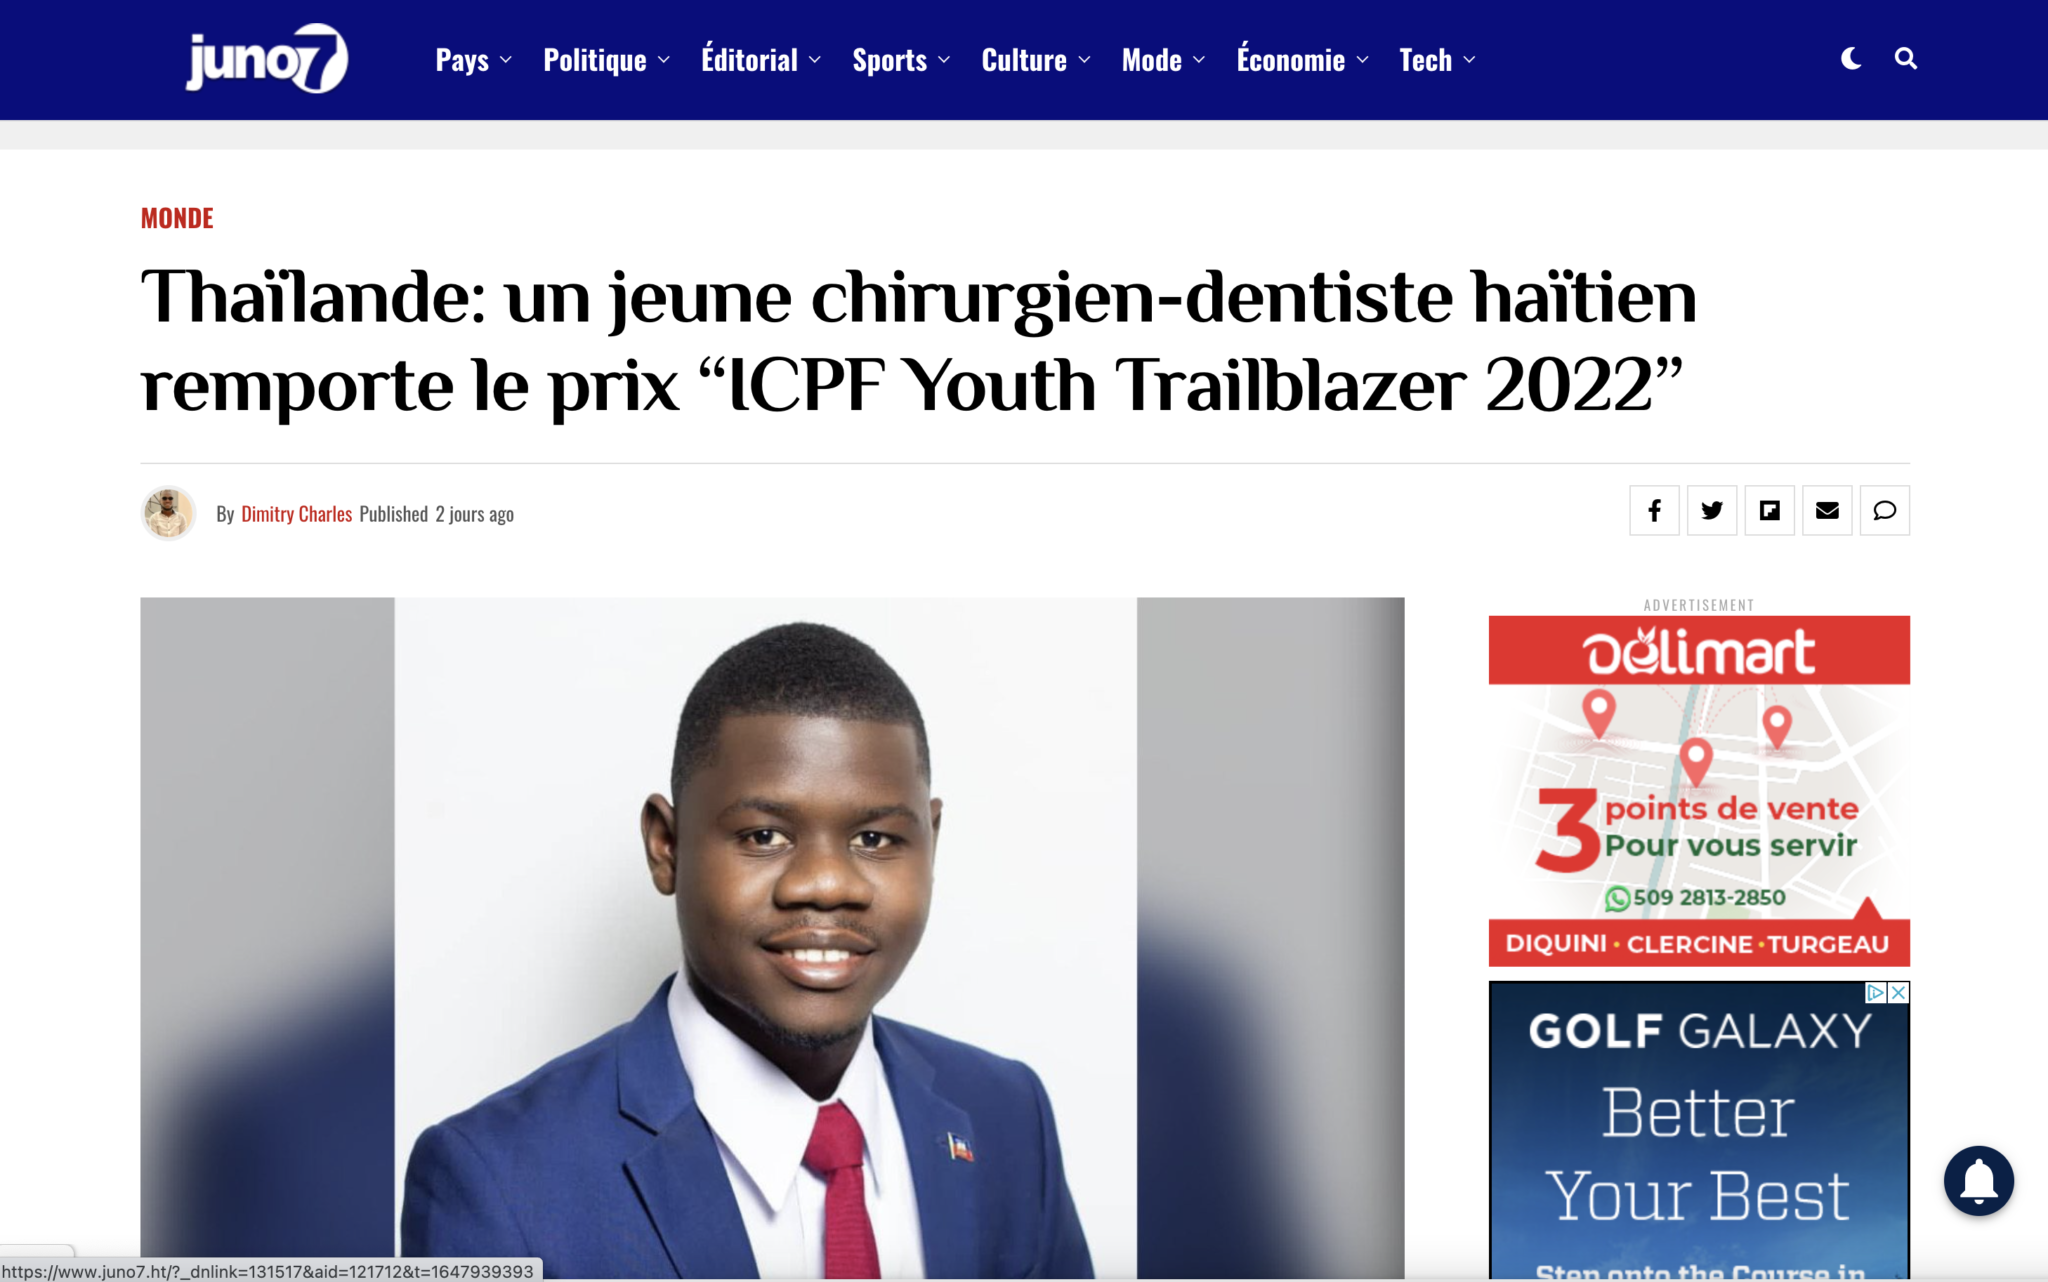 Thailand: Young Haitian Dentist Wins “ICFP Youth Trailblazer 2022” Award